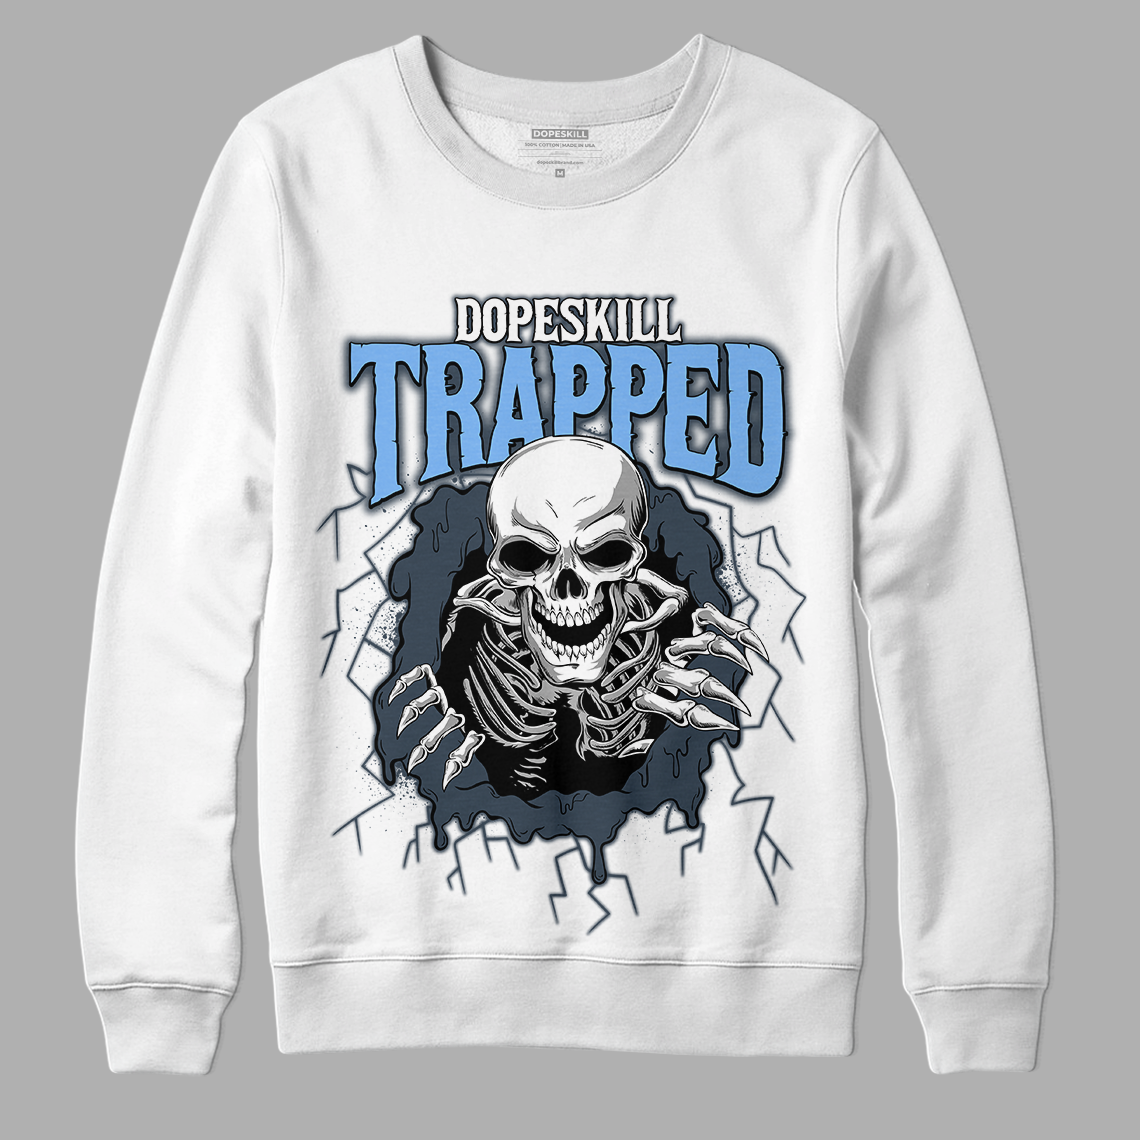 Jordan 6 Midnight Navy DopeSkill Sweatshirt Trapped Halloween Graphic